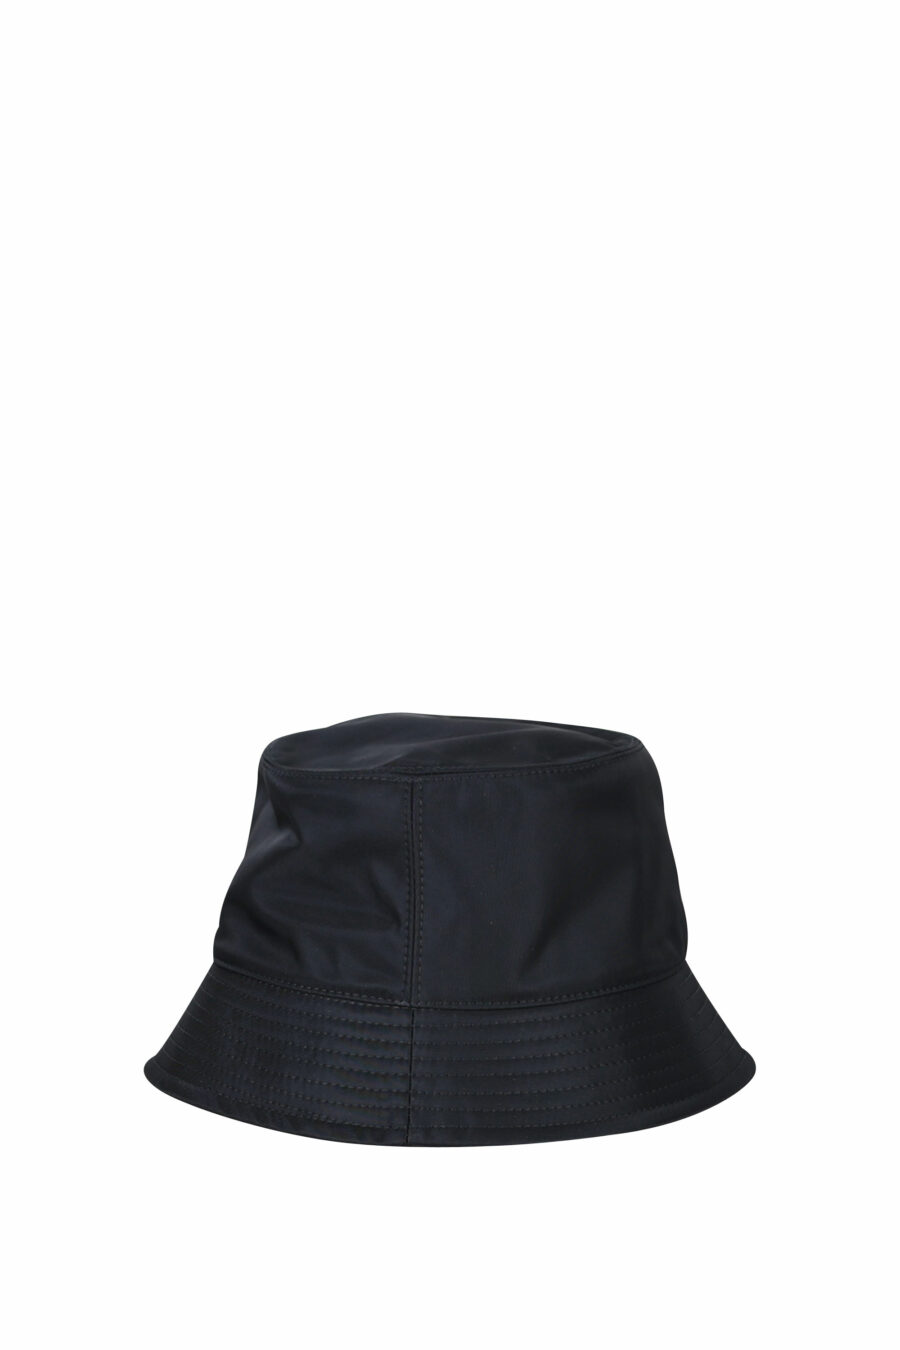 Black fisherman's cap with mini-logo "icon" - 8055777238837 1